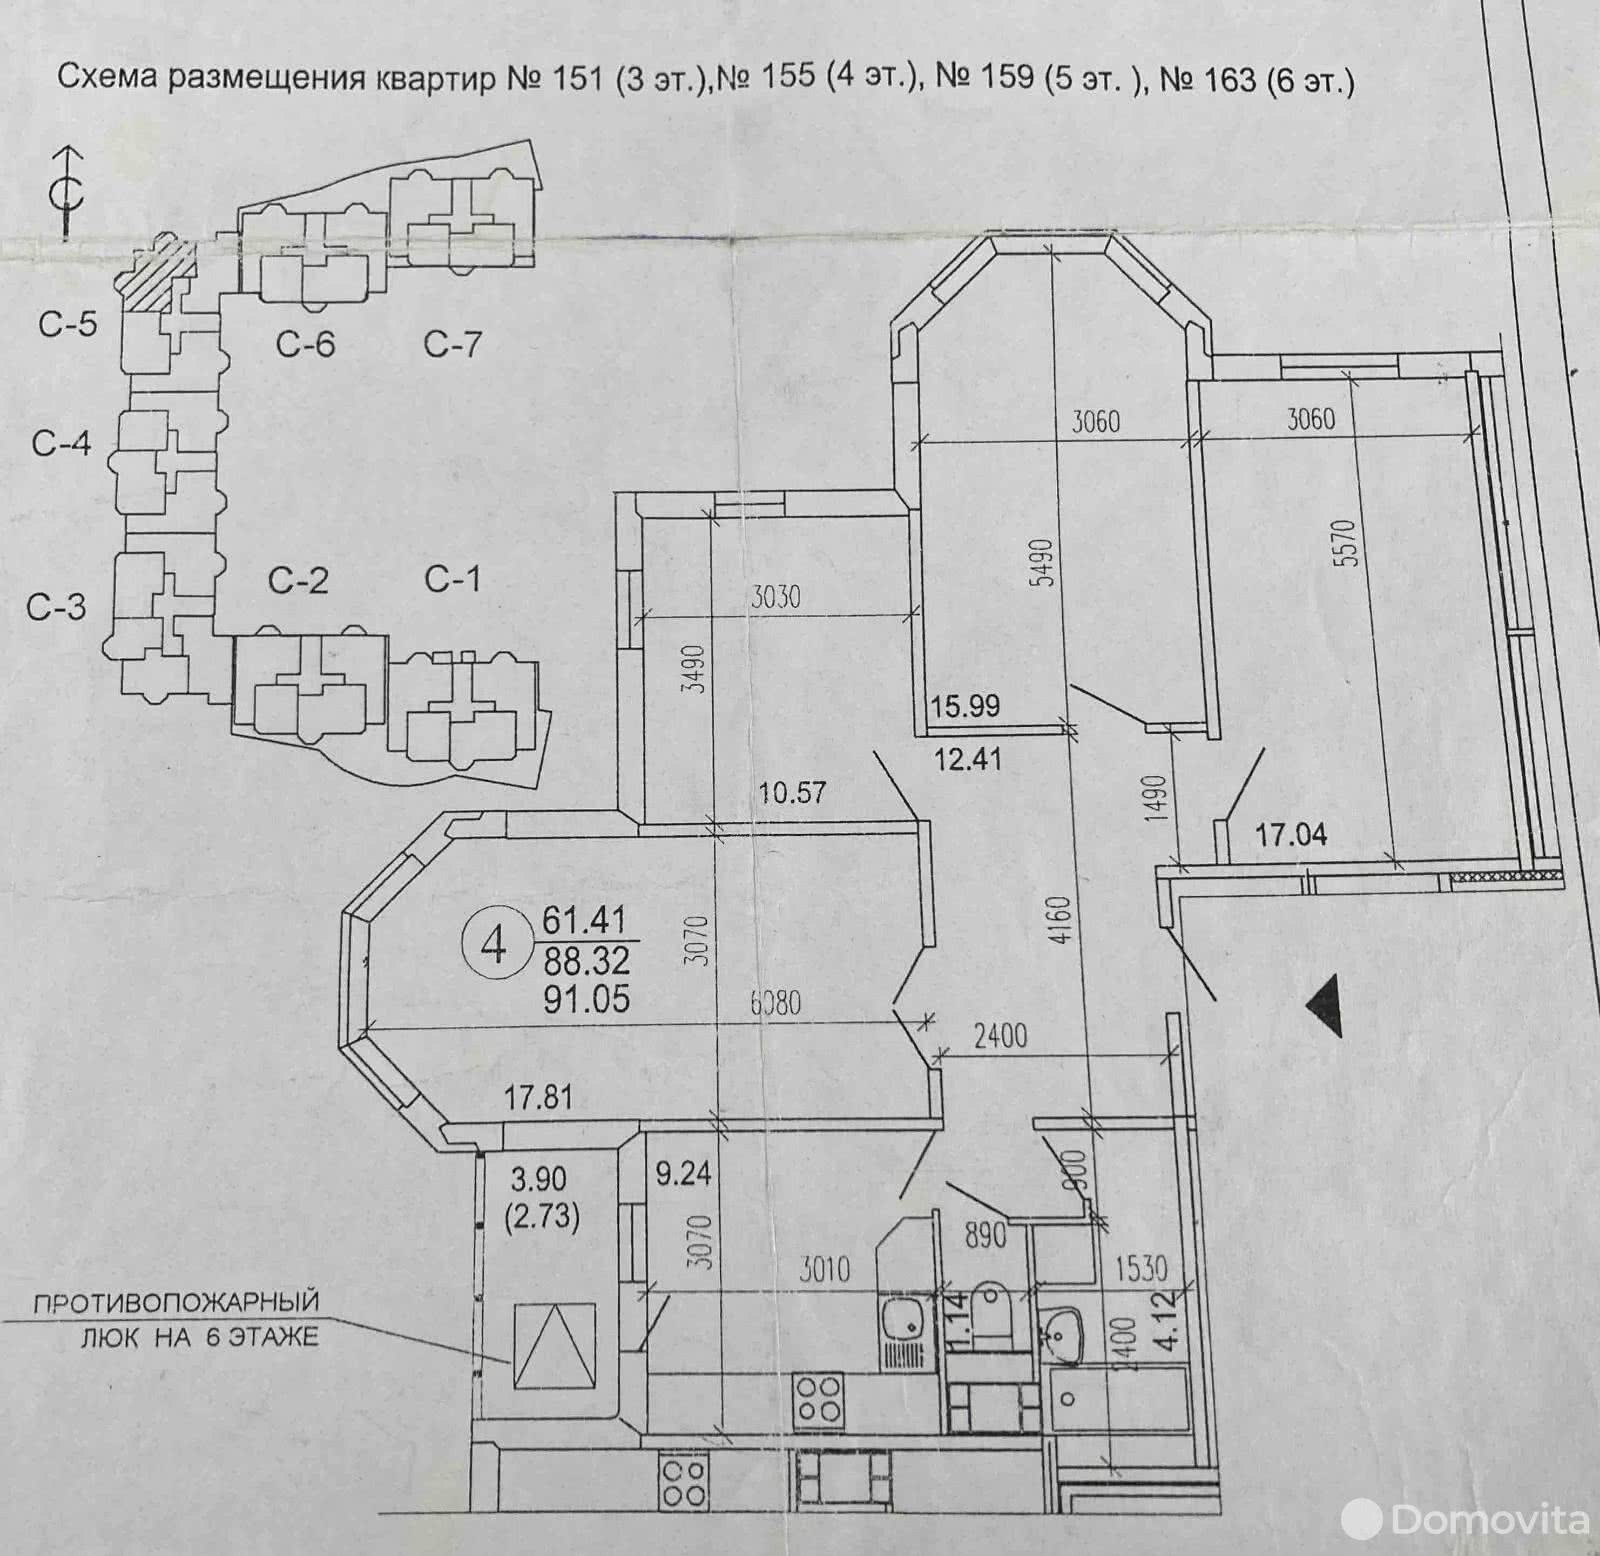 Цена продажи квартиры, Минск, пер. Тимошенко 2-й, д. 3